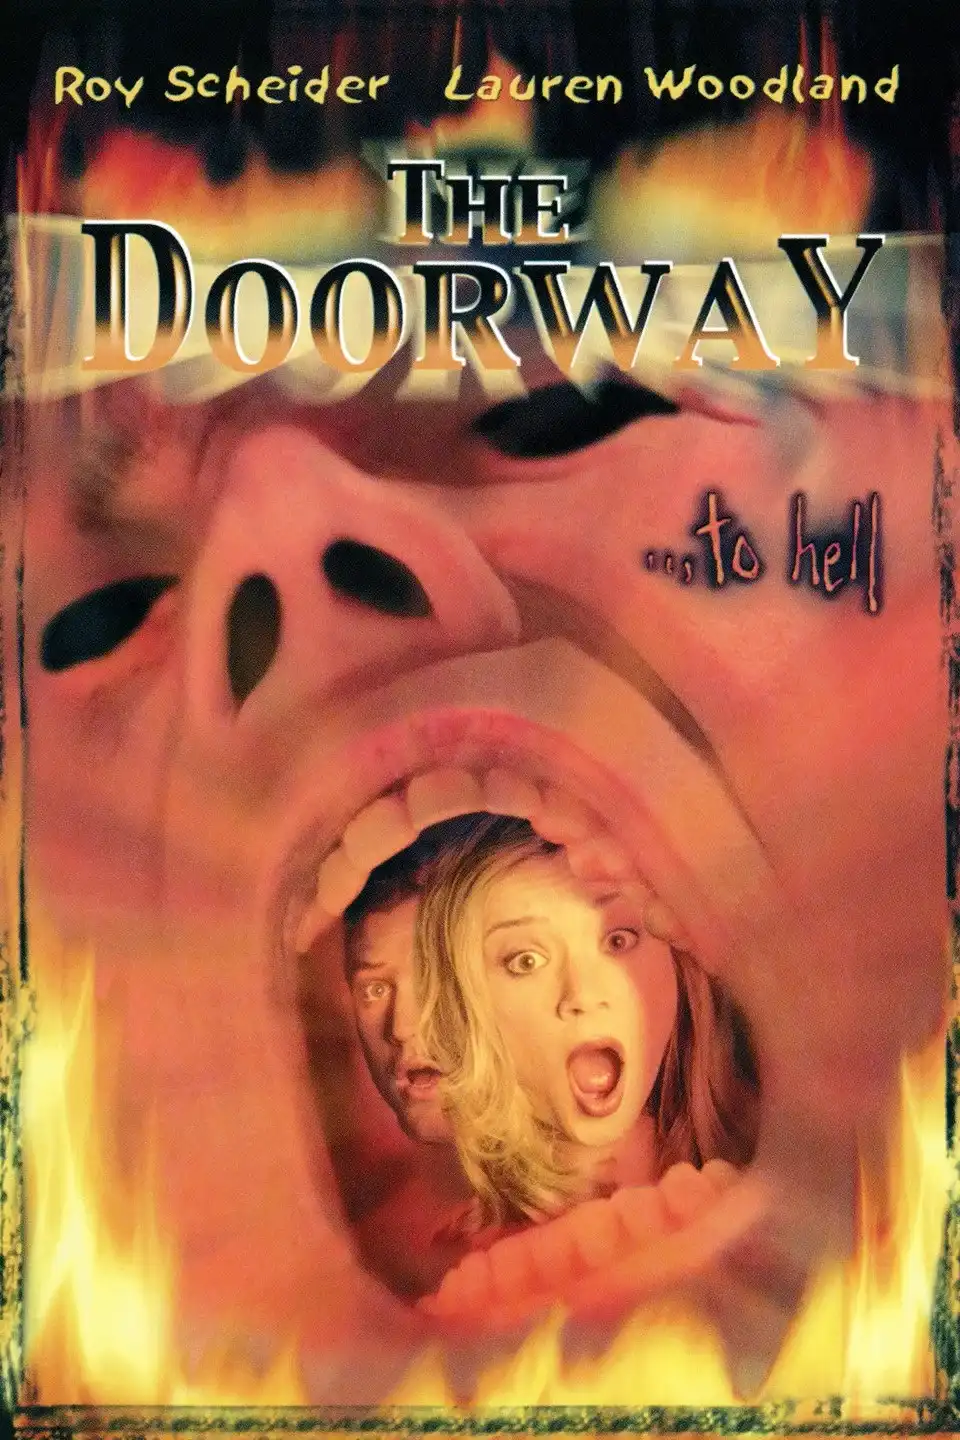 Watch and Download The Doorway 1